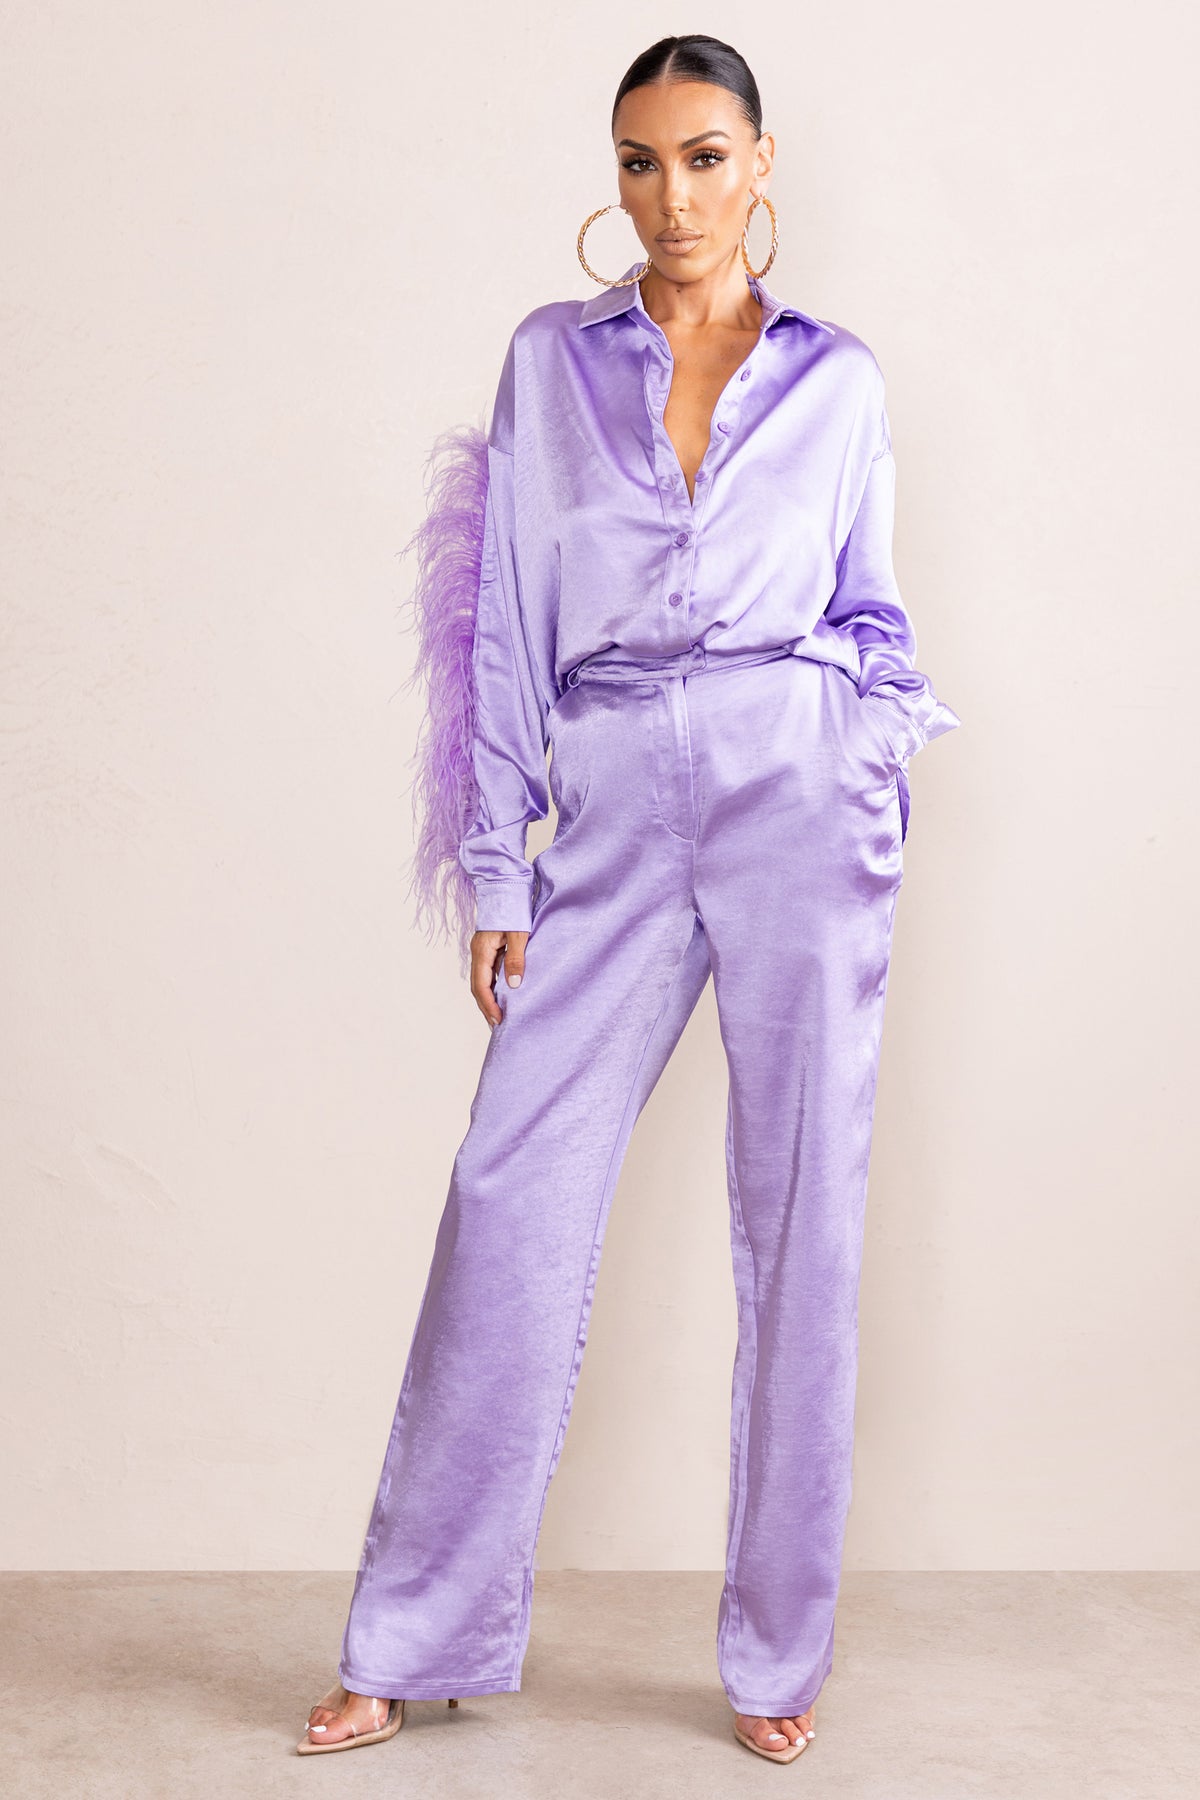 Premium AI Image | purple satin men's pajama pants on a white background